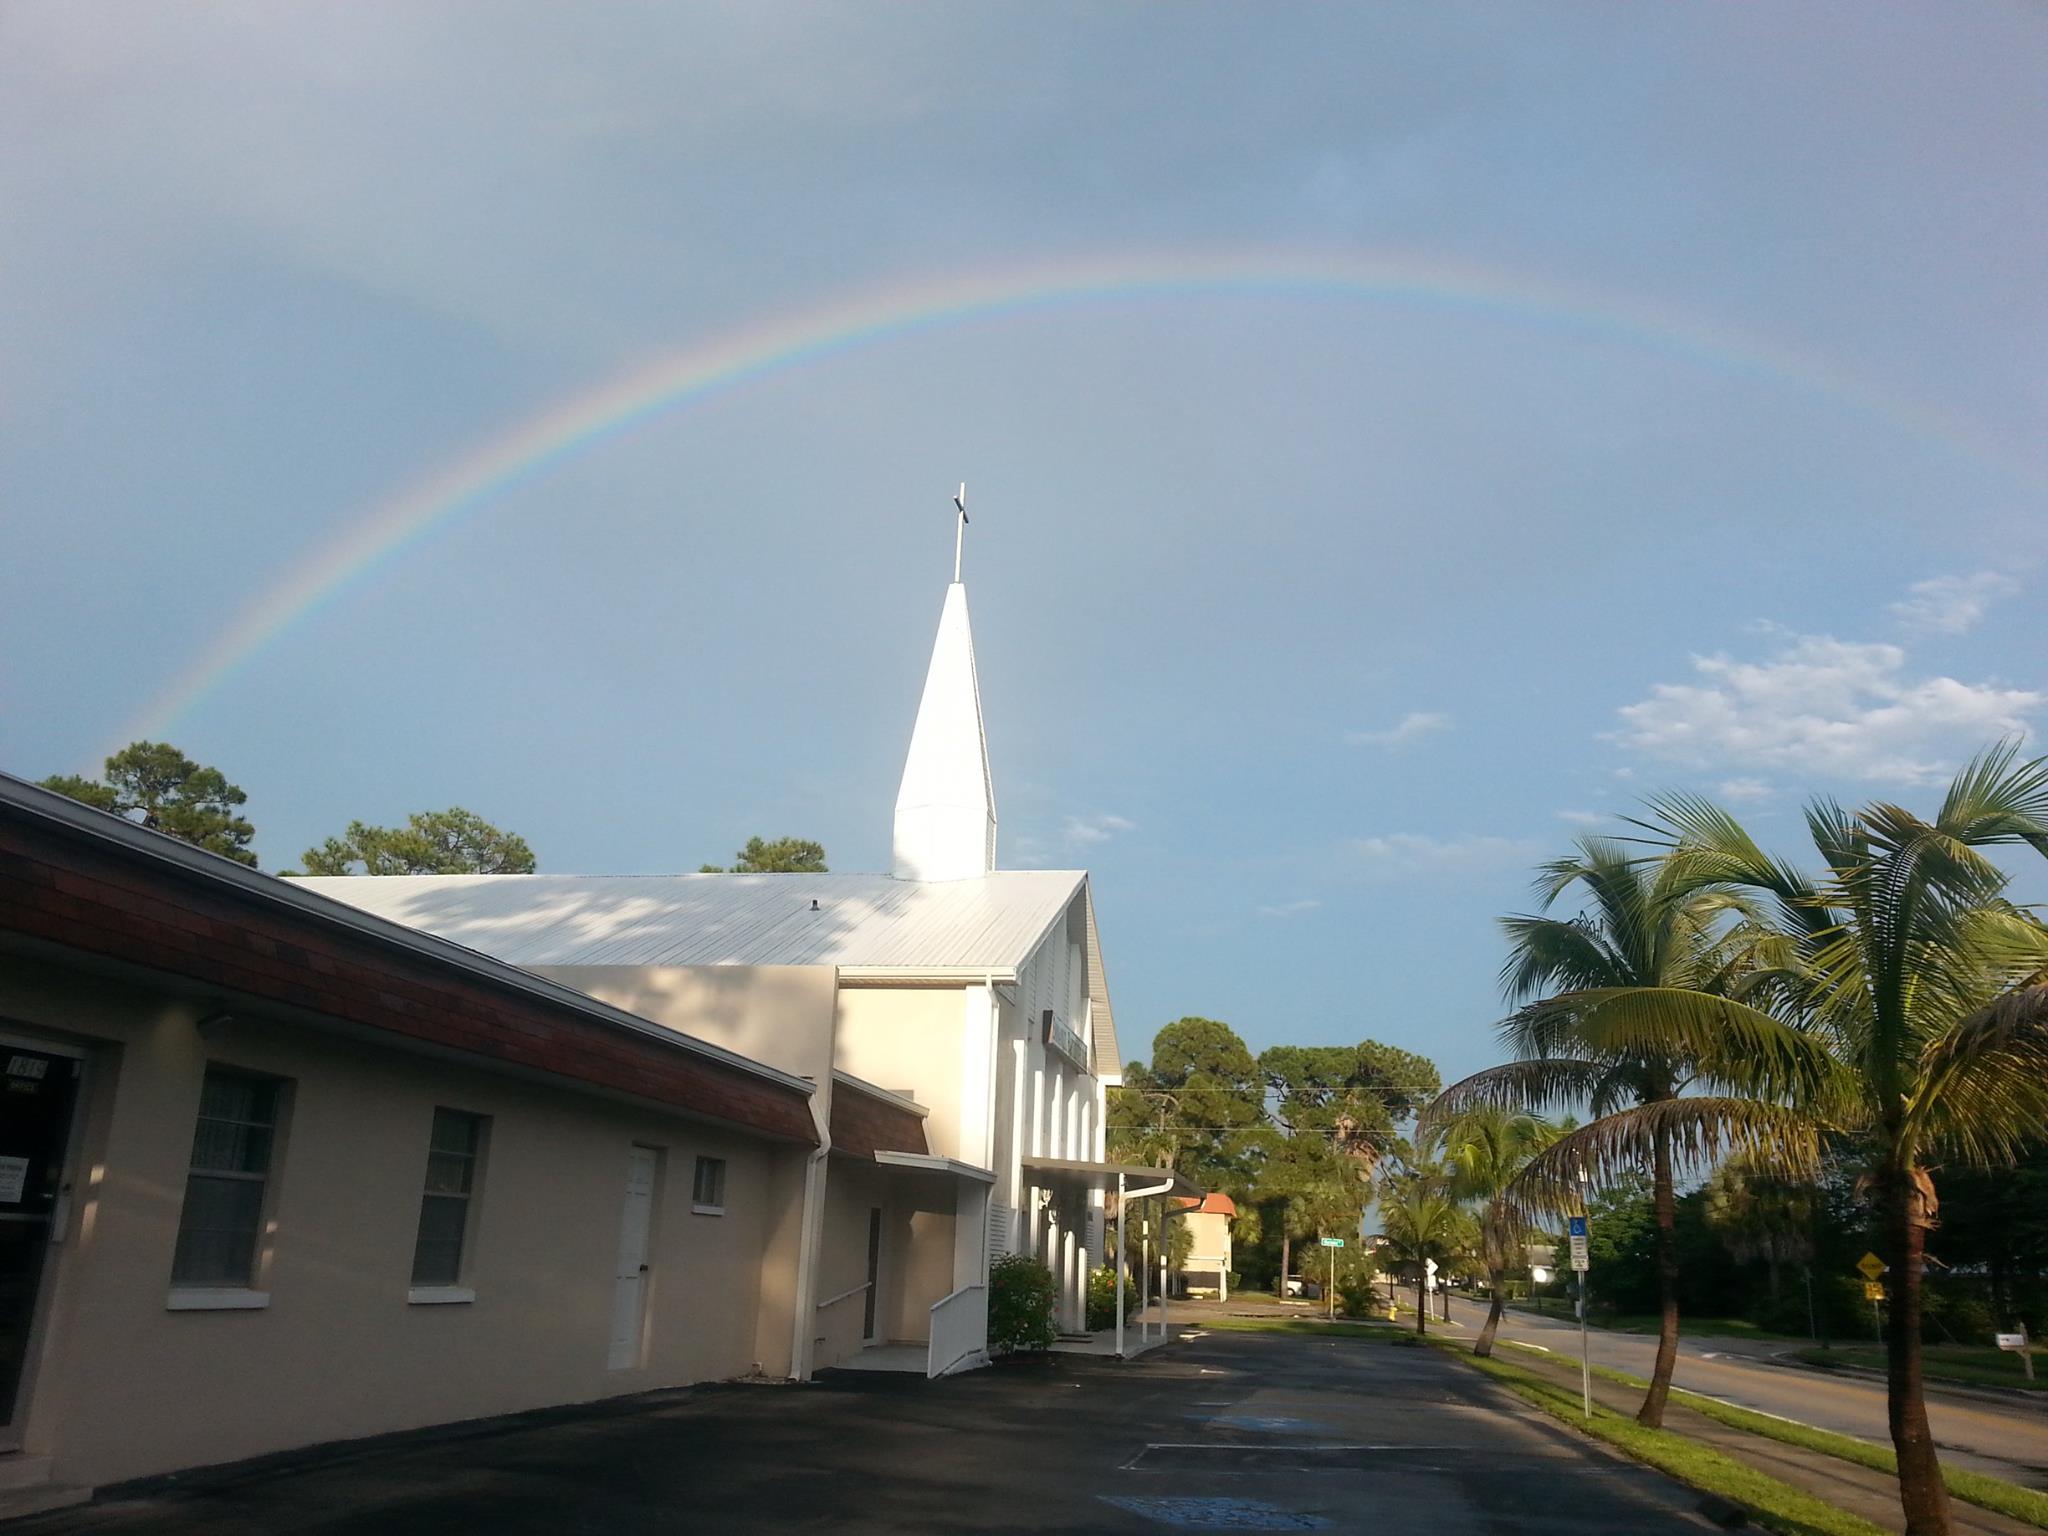 Rainbow over the steeple